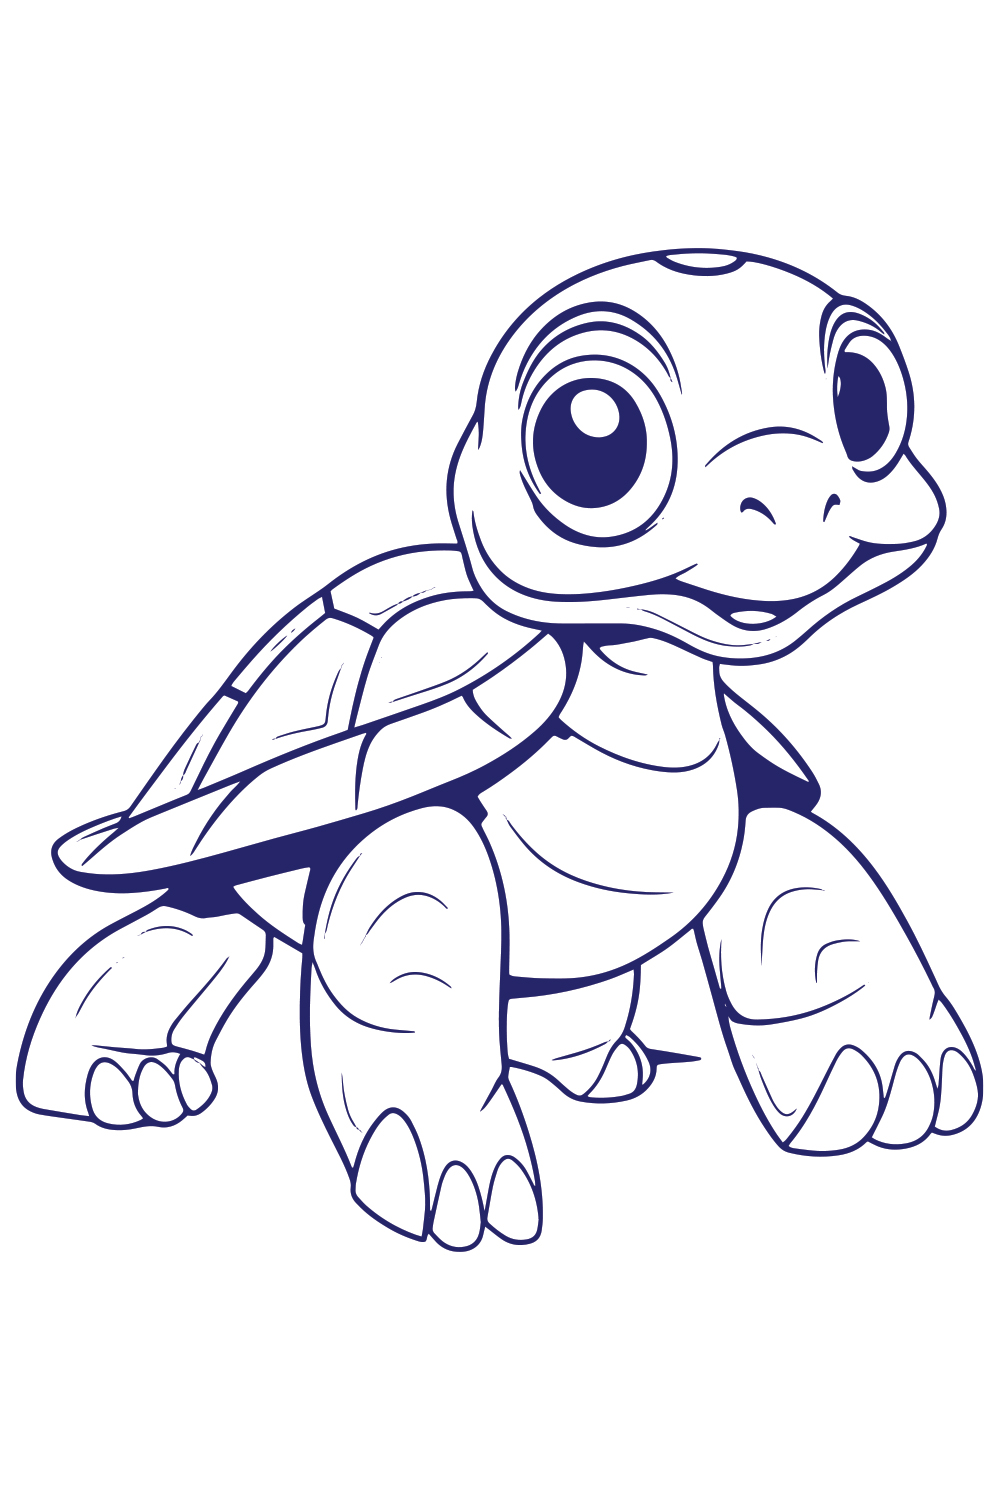 Cute Turtle illustration pinterest preview image.